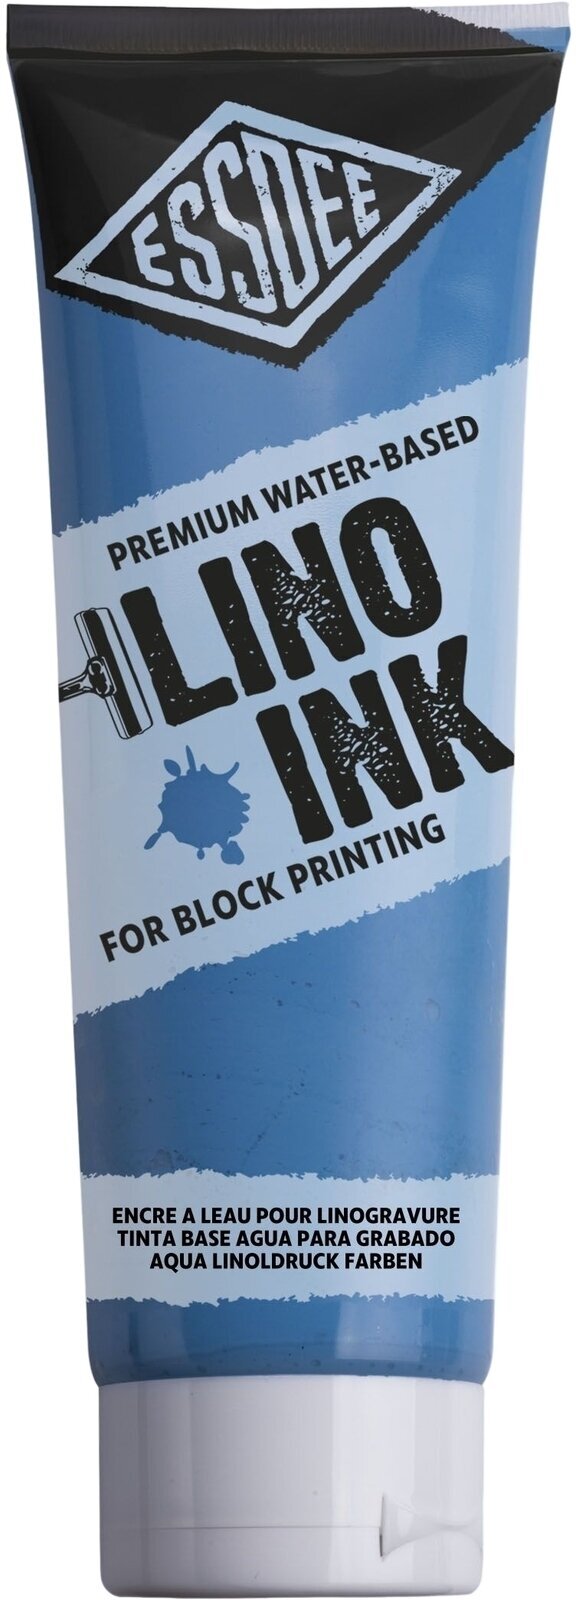 Paint For Linocut Essdee Block Printing Ink Paint For Linocut Fluorescent Blue 300 ml